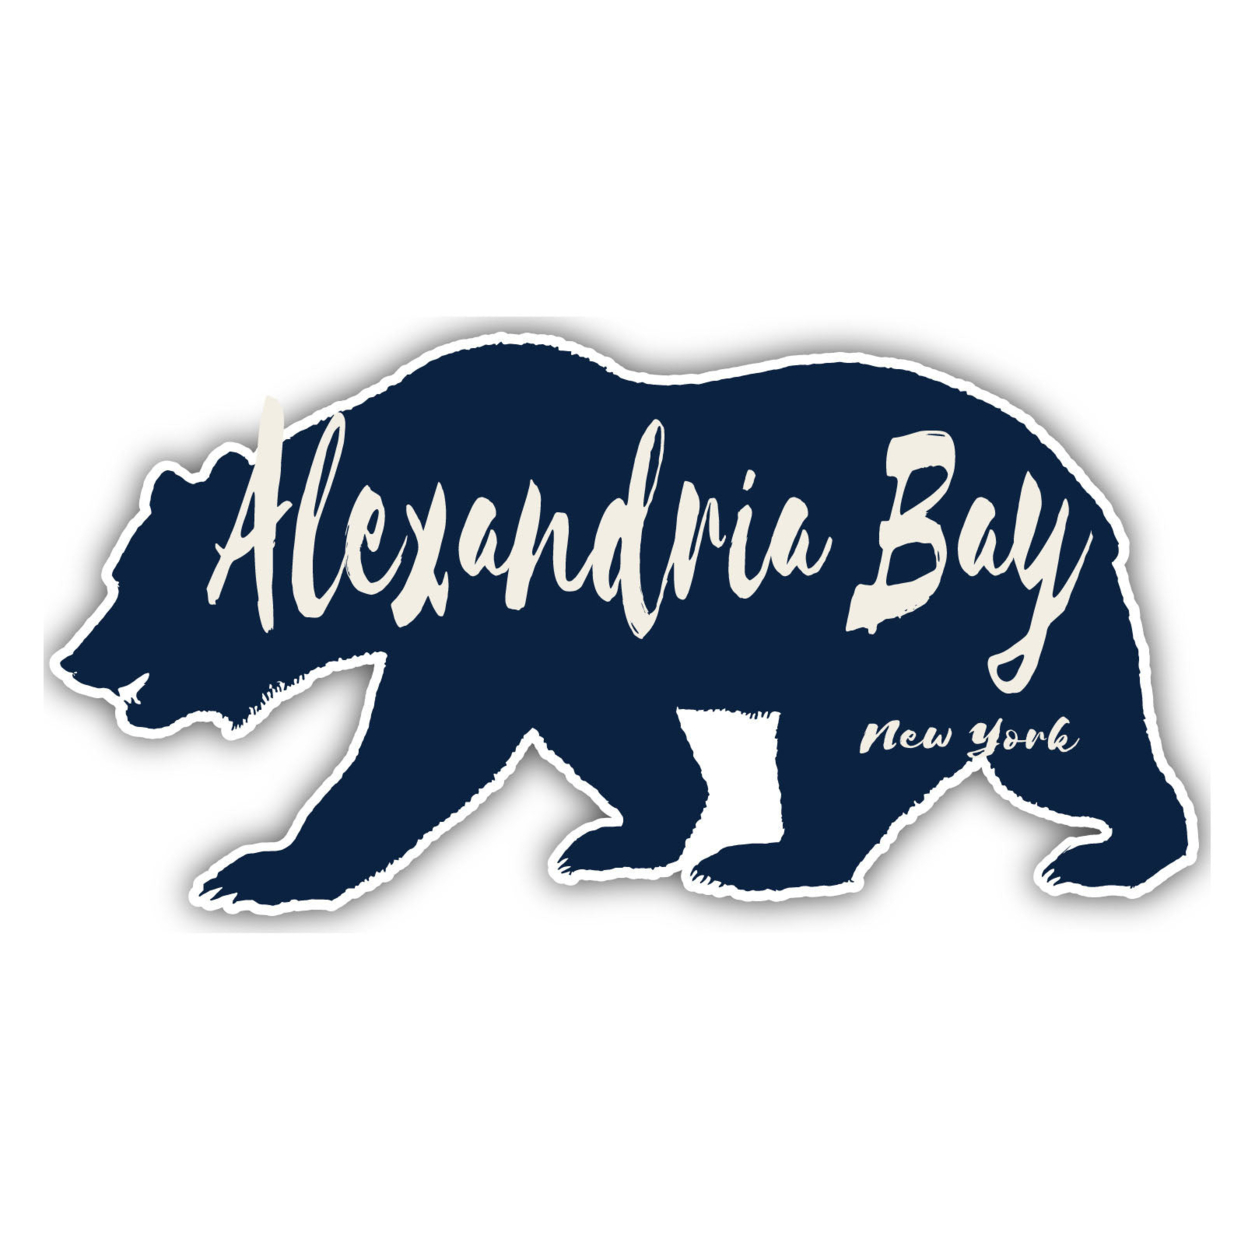 Alexandria Bay New York Souvenir Decorative Stickers (Choose Theme And Size) - Single Unit, 12-Inch, Tent